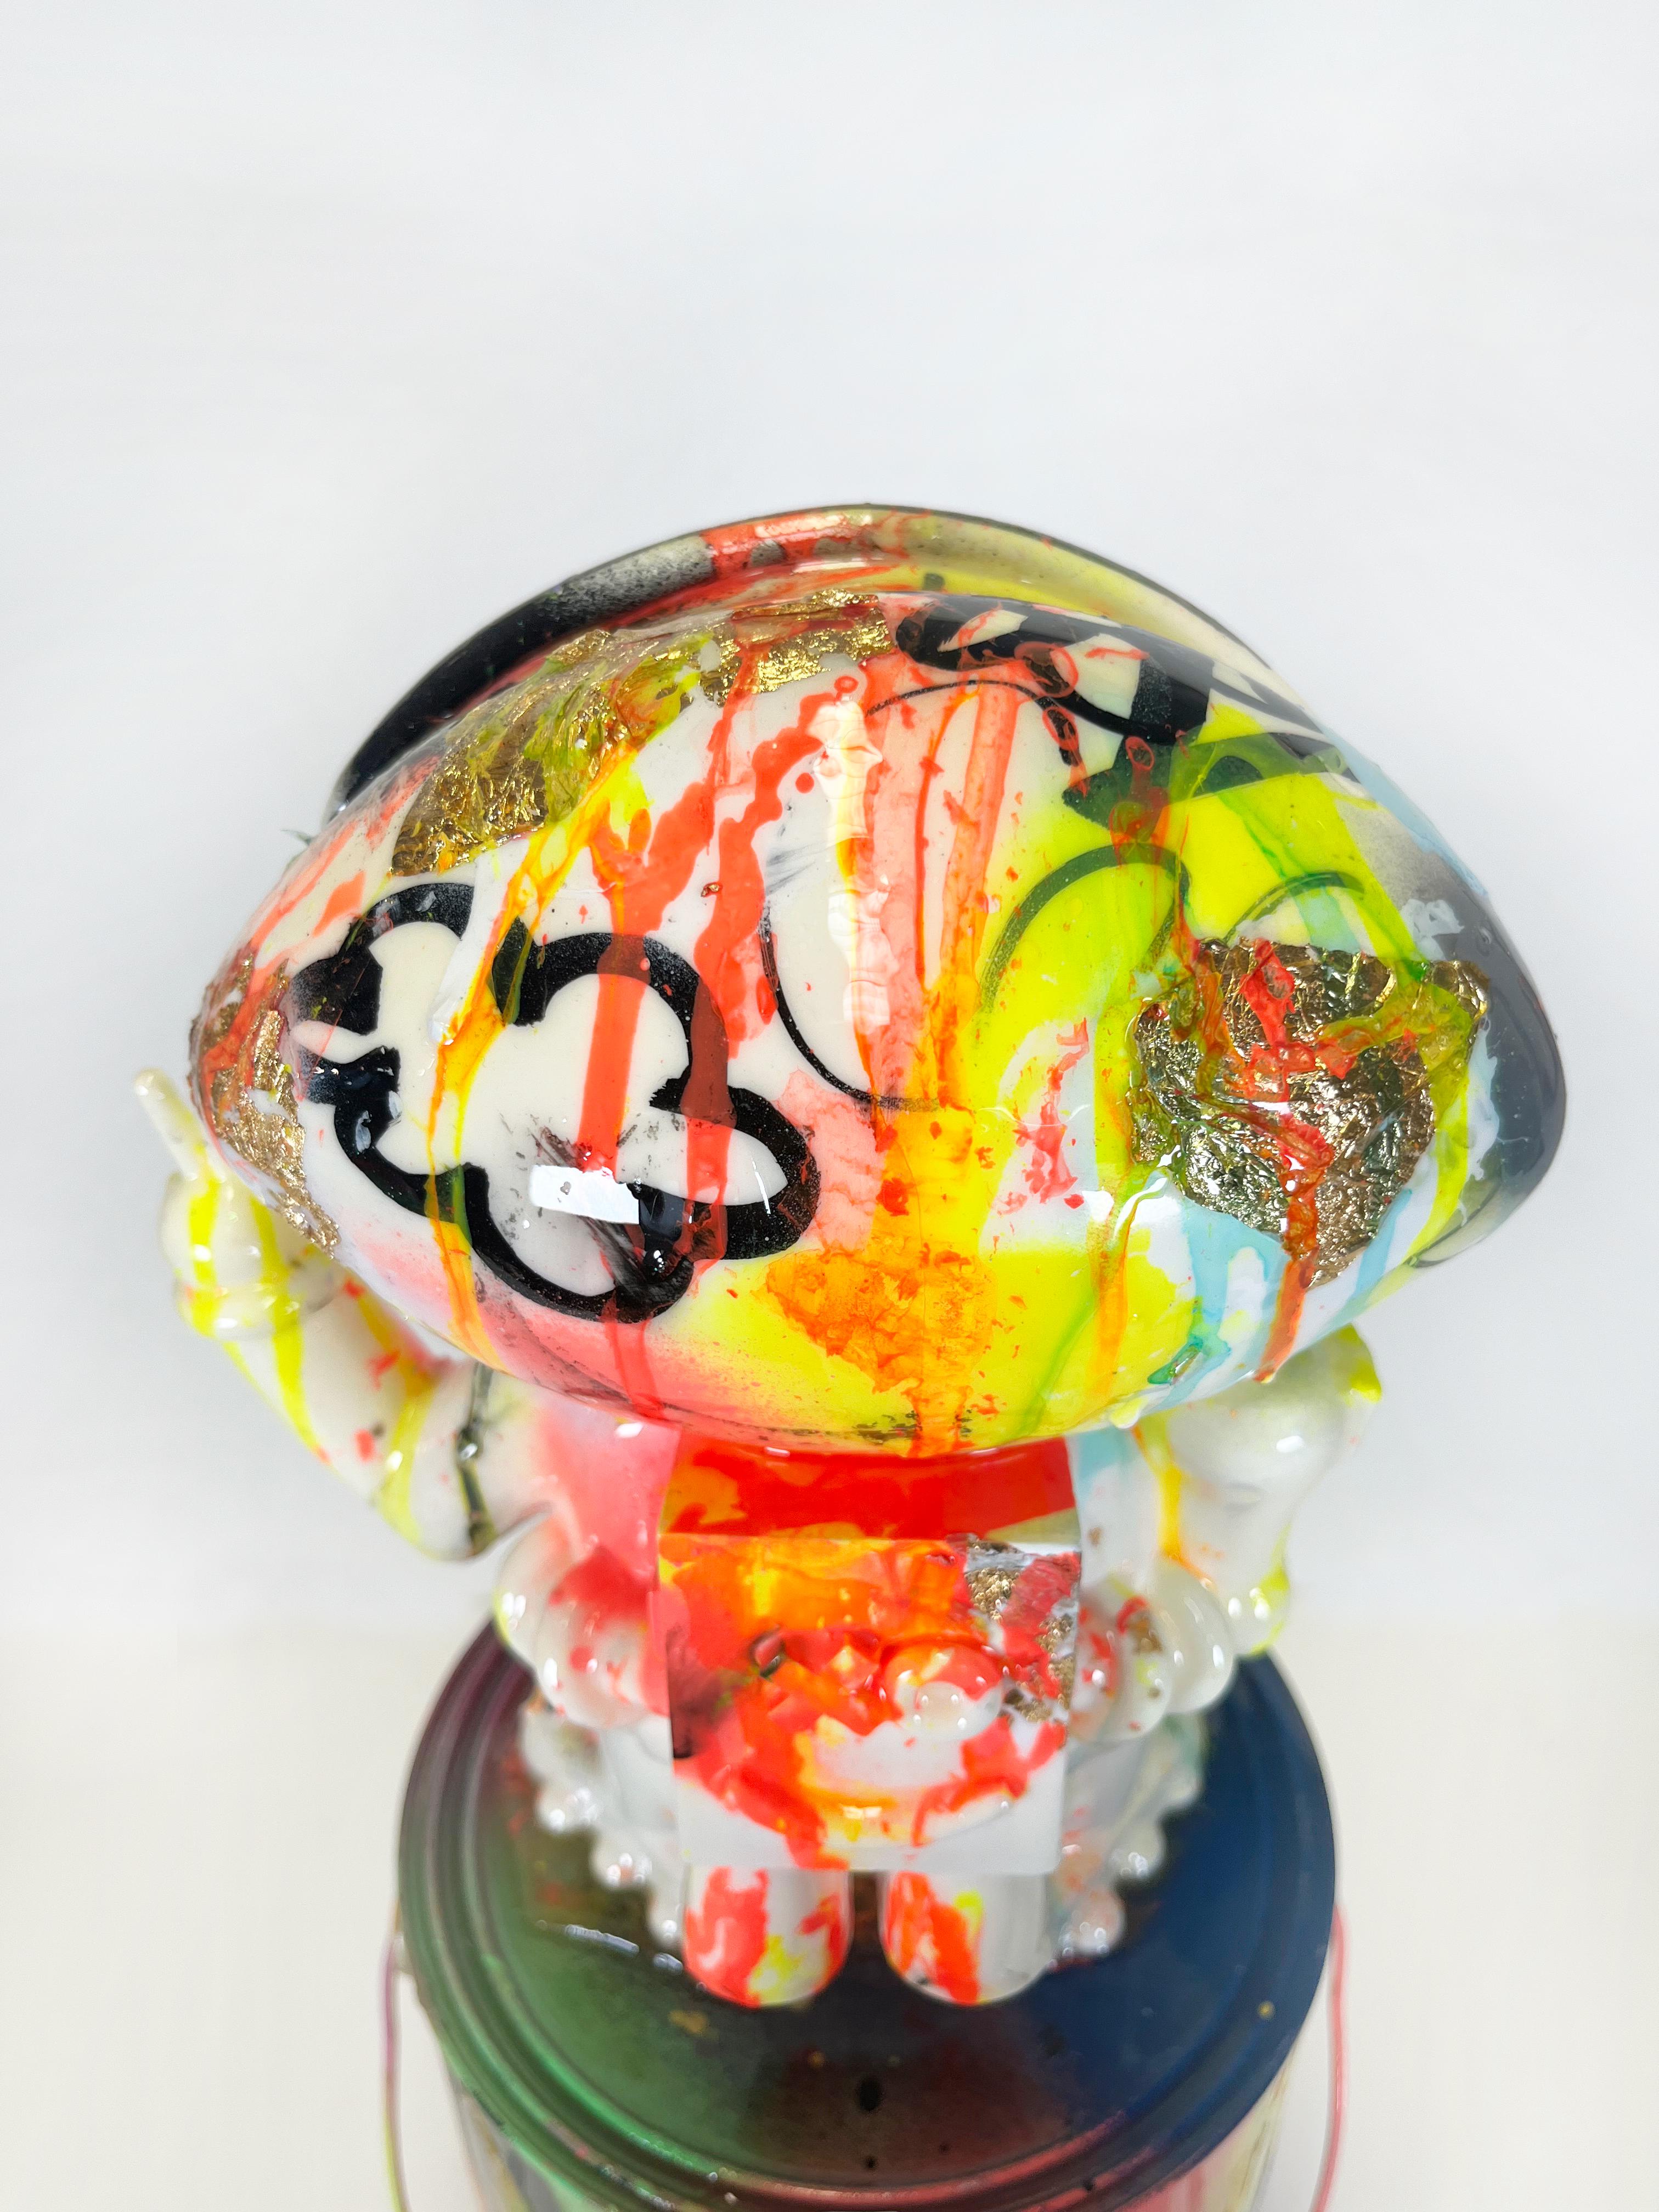 Technicolour Xeno Paint Can v2, farbenfrohe und kühle Figurenskulptur aus Harzguss, Xeno (Grau), Abstract Sculpture, von Chris Solcz